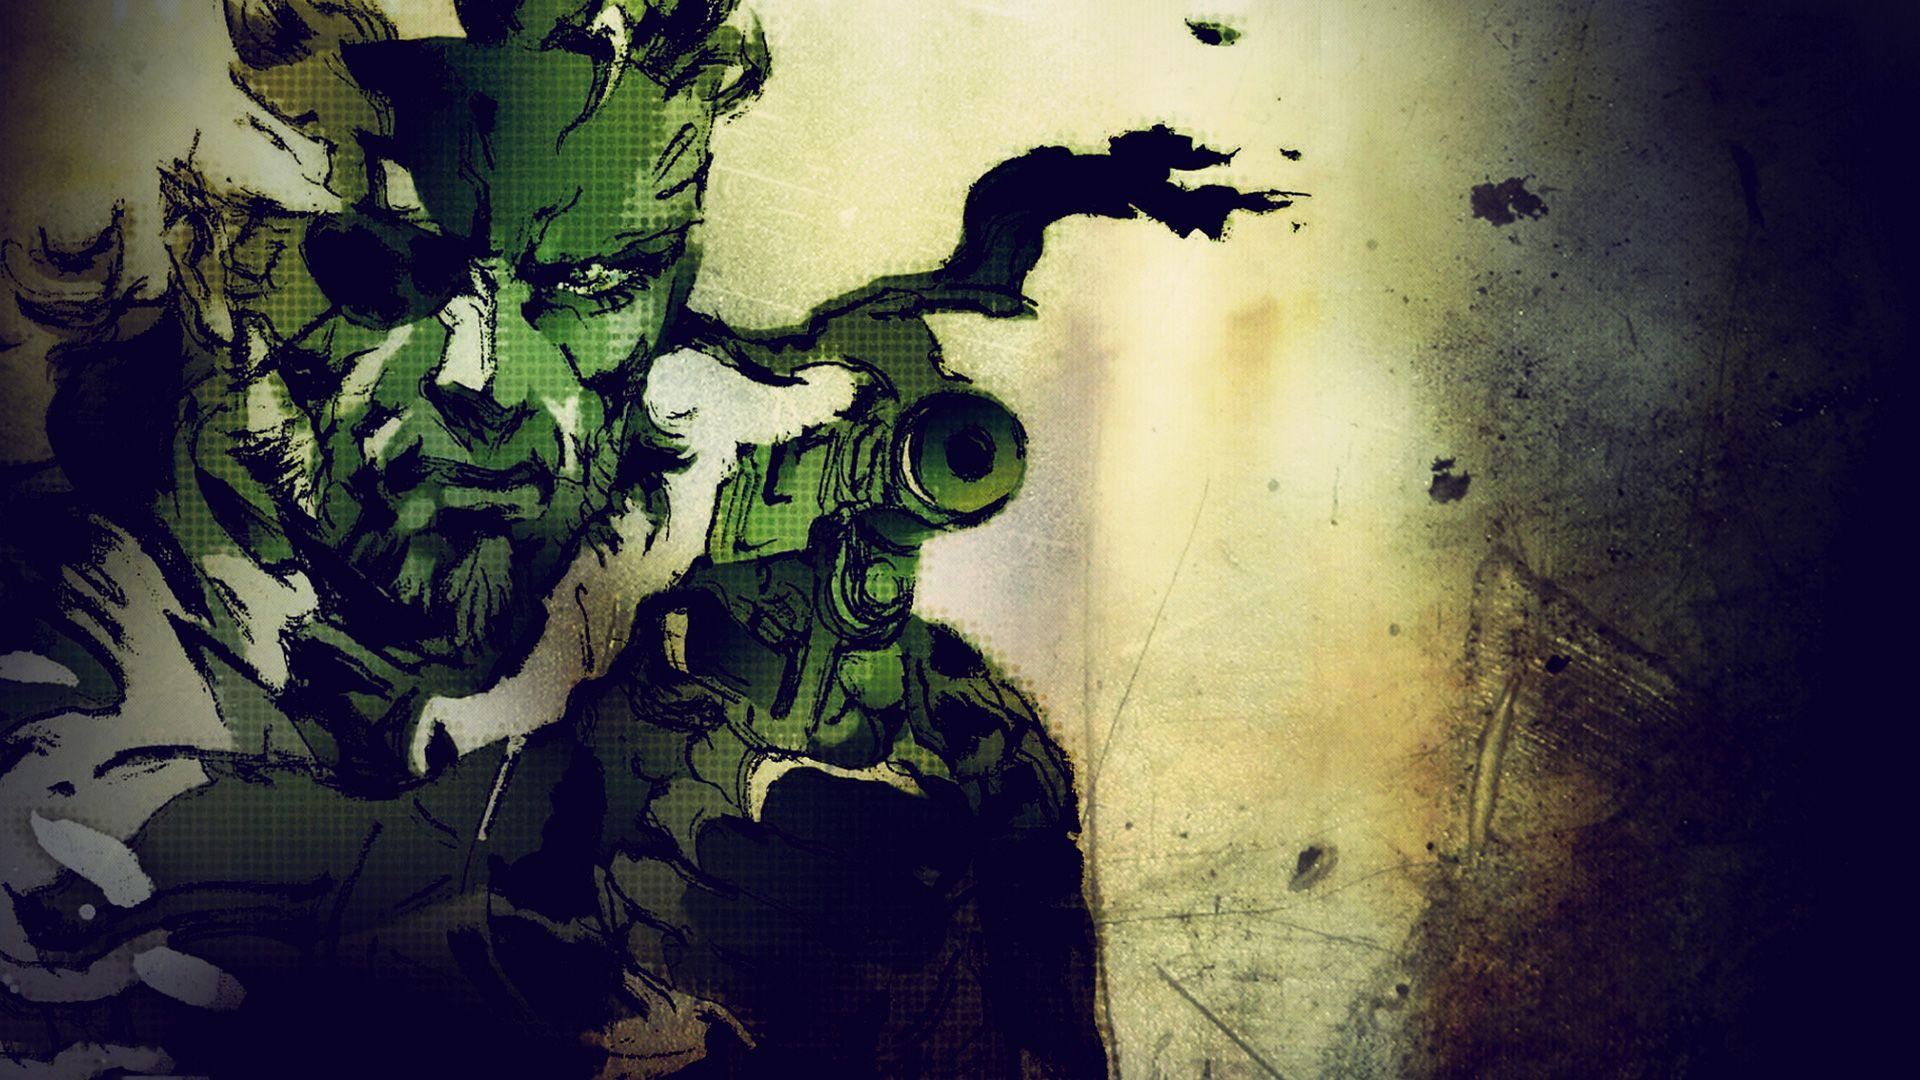 Metal Gear 4k Wallpapers Top Free Metal Gear 4k Backgrounds Wallpaperaccess